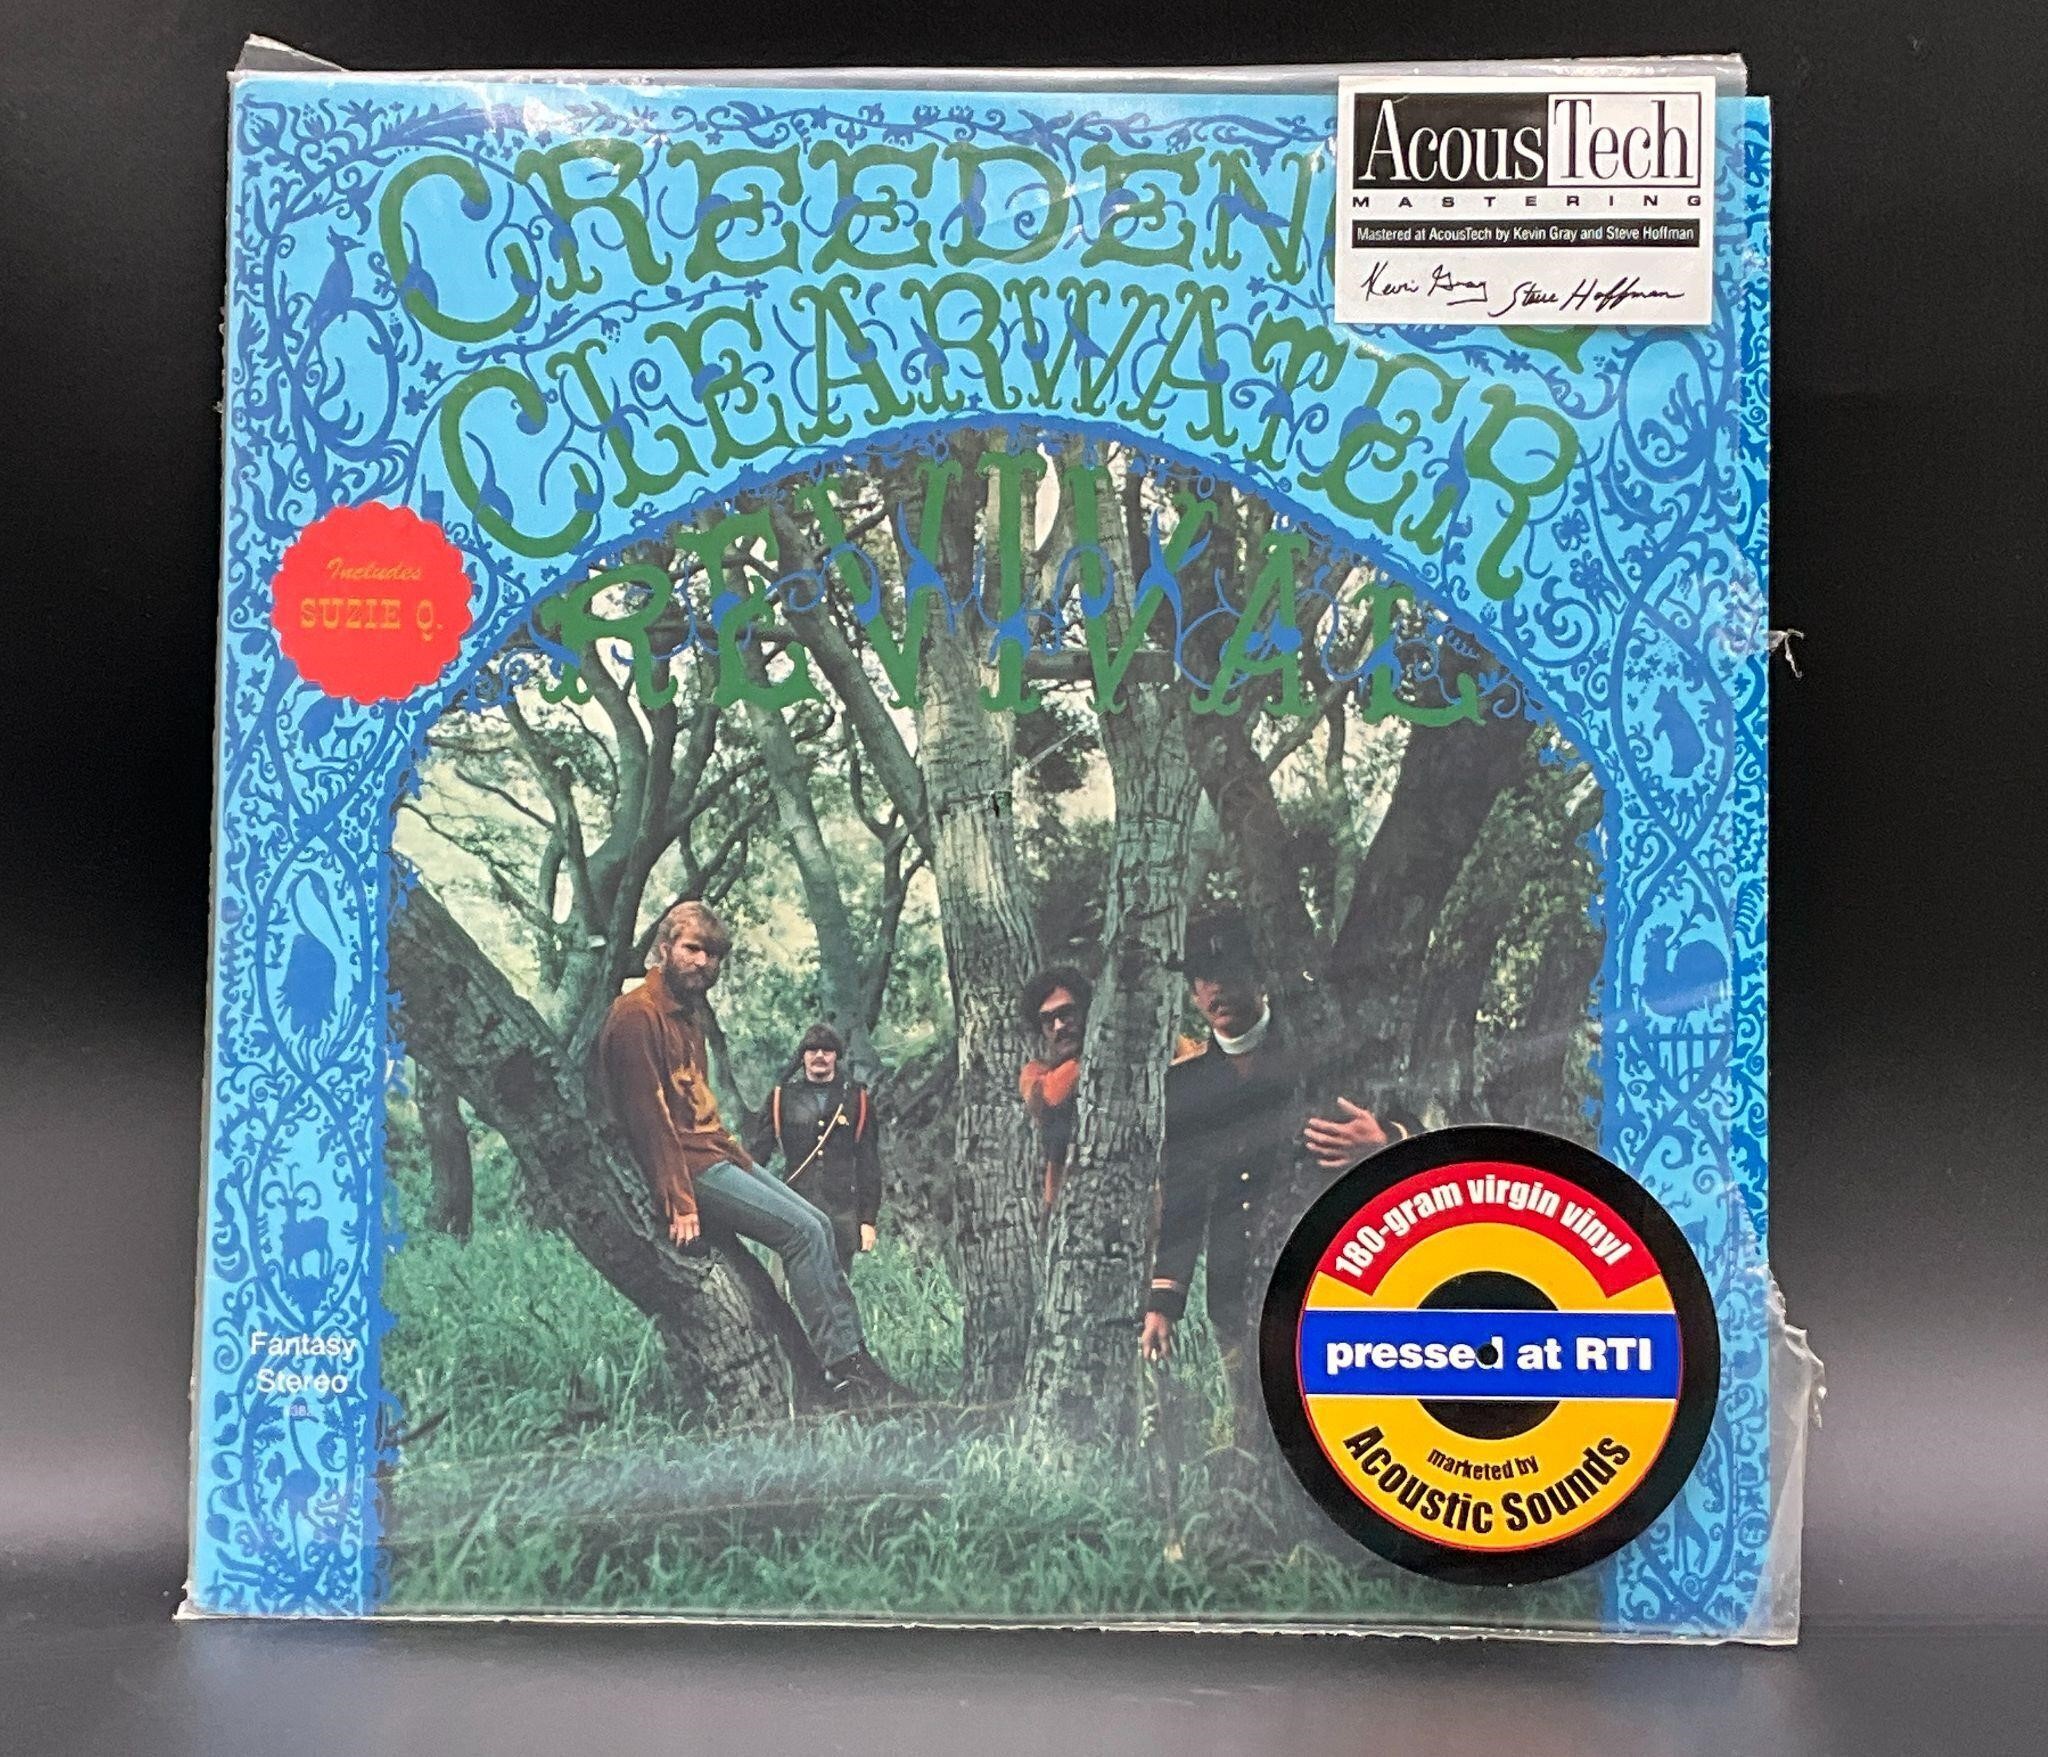 2002 Creedence Clearwater Revival Ltd Ed LP